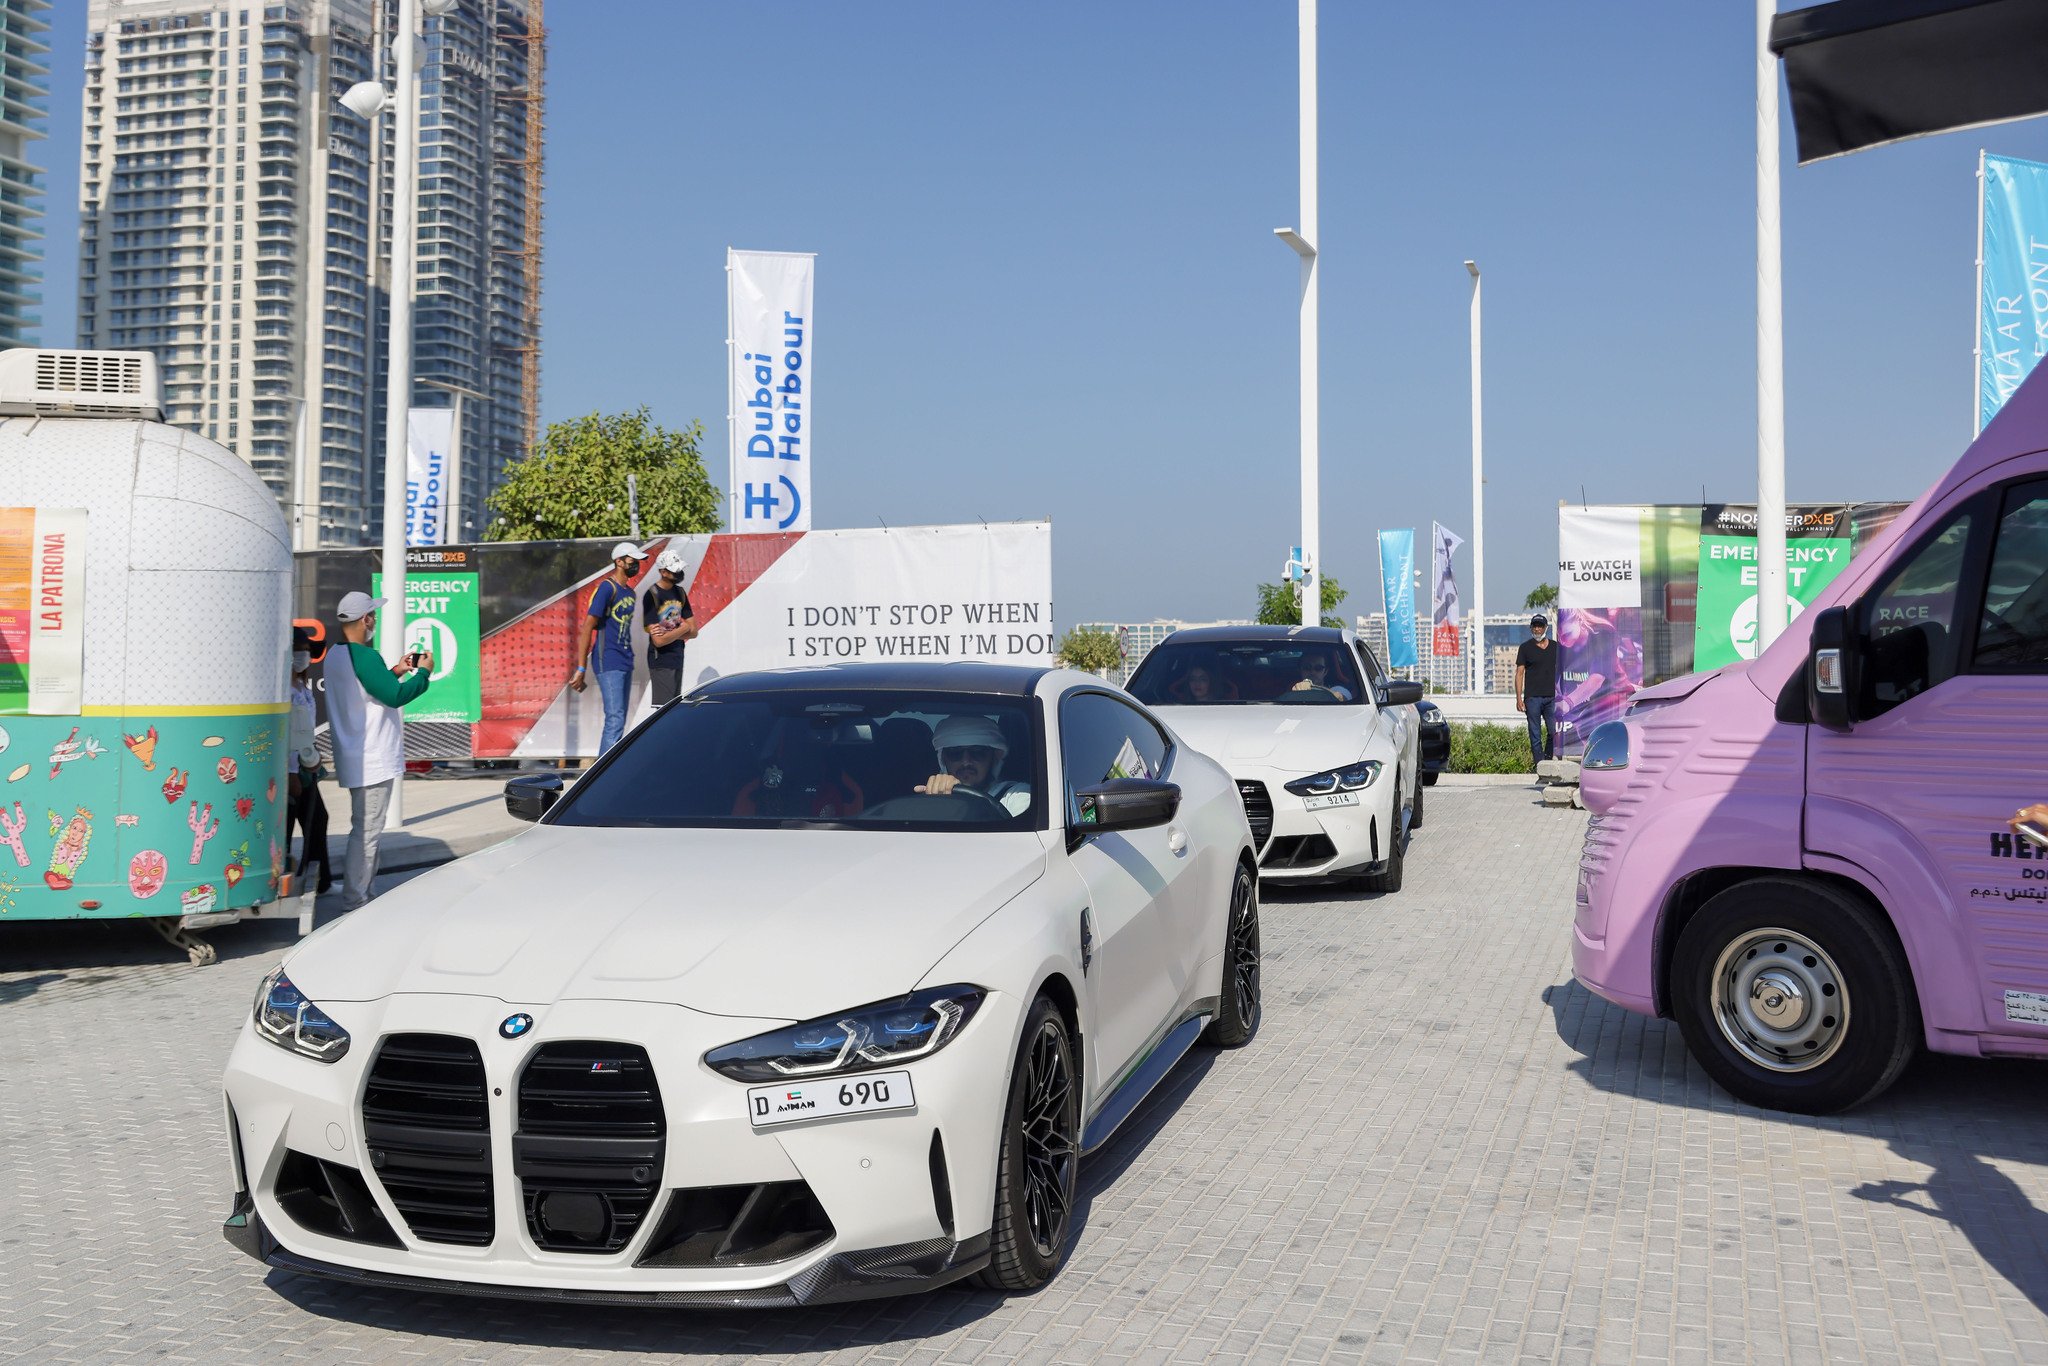 BMW club UAE joins #NOFILTERDXB